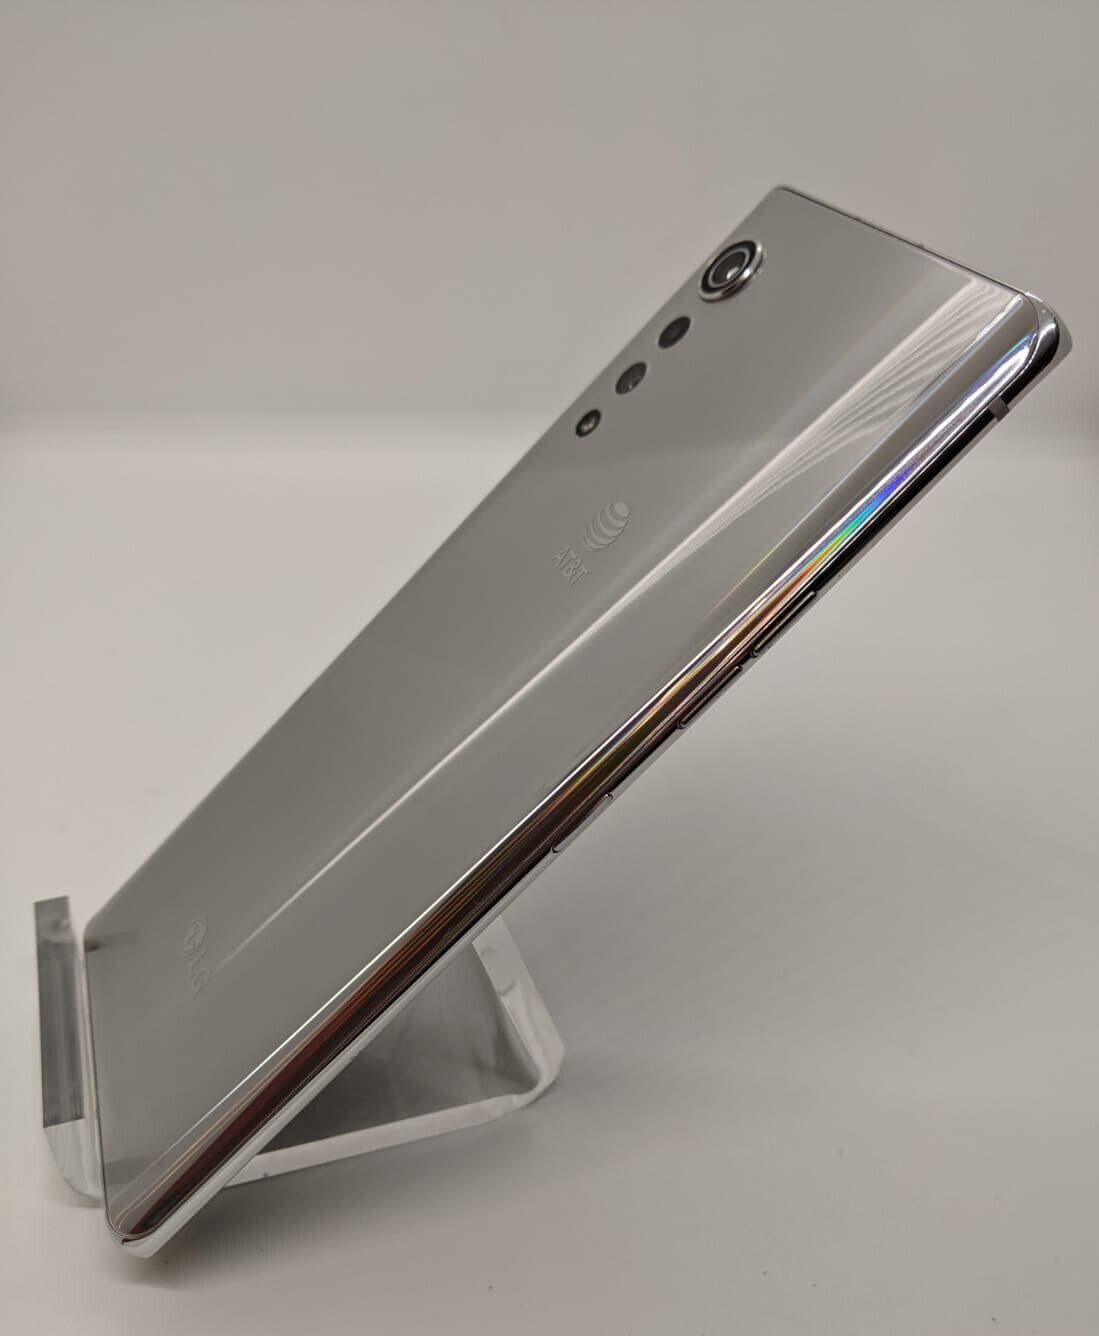 LG Velvet 5G 128GB AT&T Aurora Silver Android Smartphone LM-G900UM